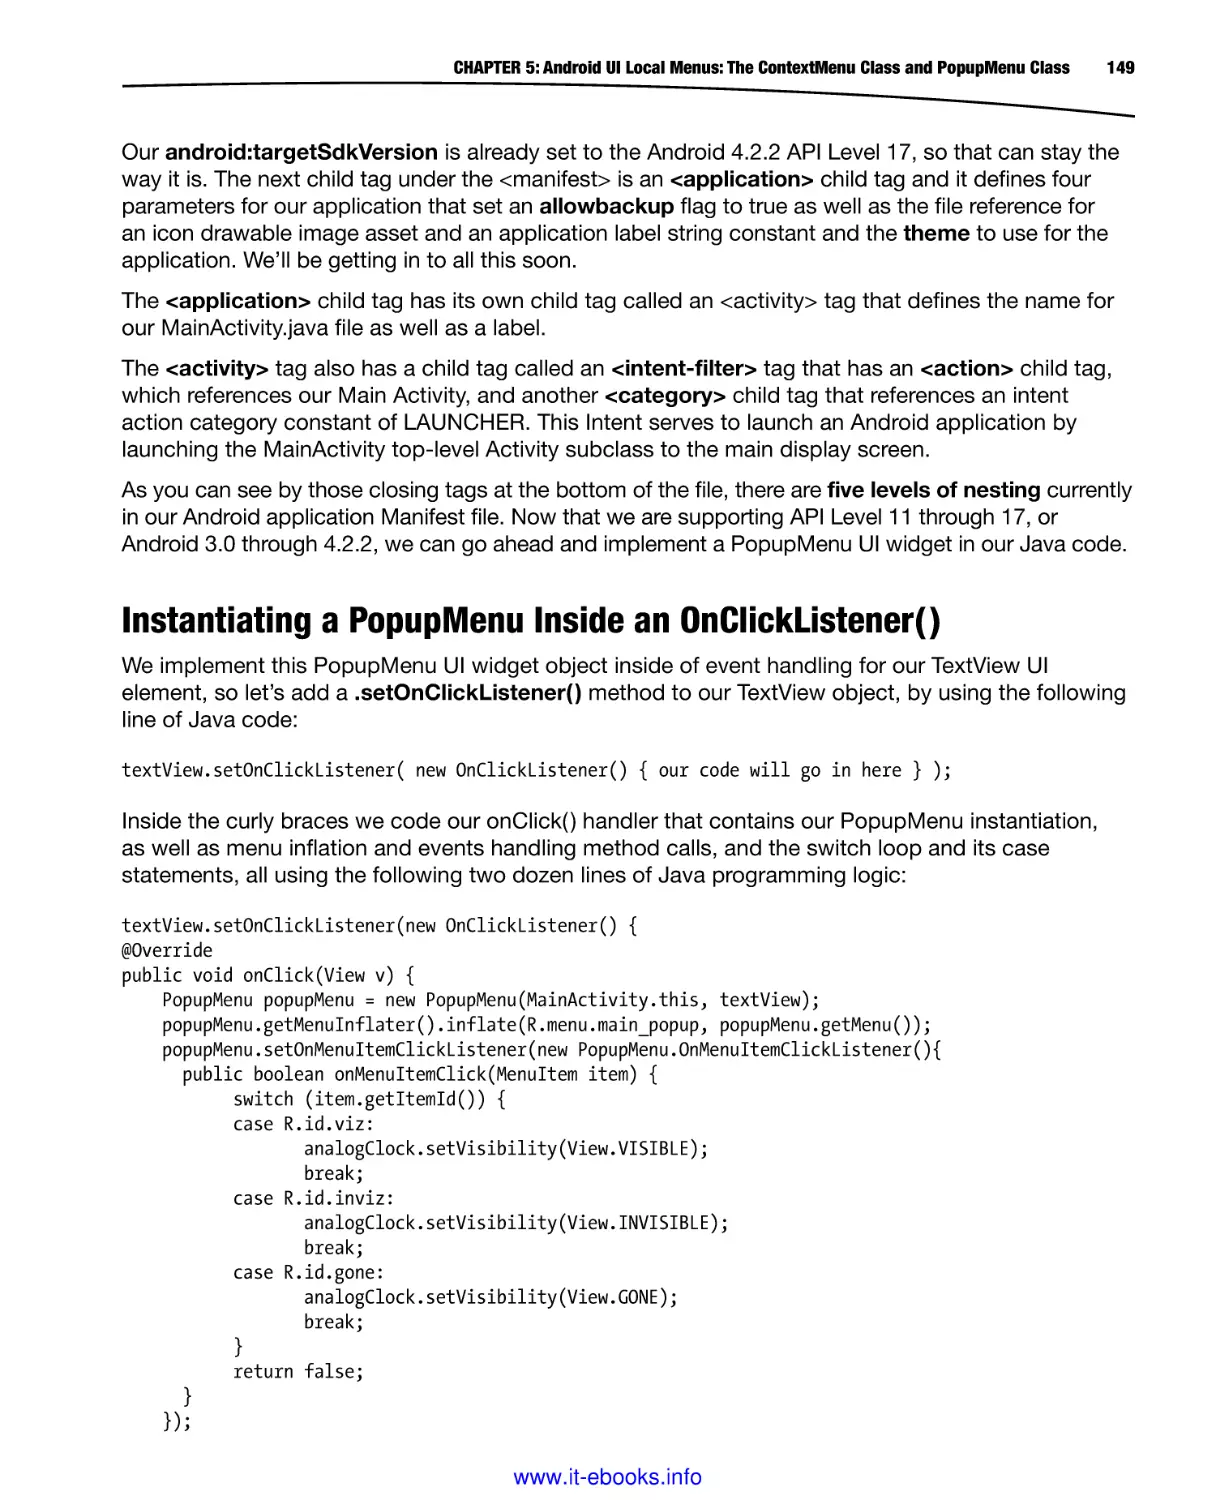 Instantiating a PopupMenu Inside an OnClickListener( )